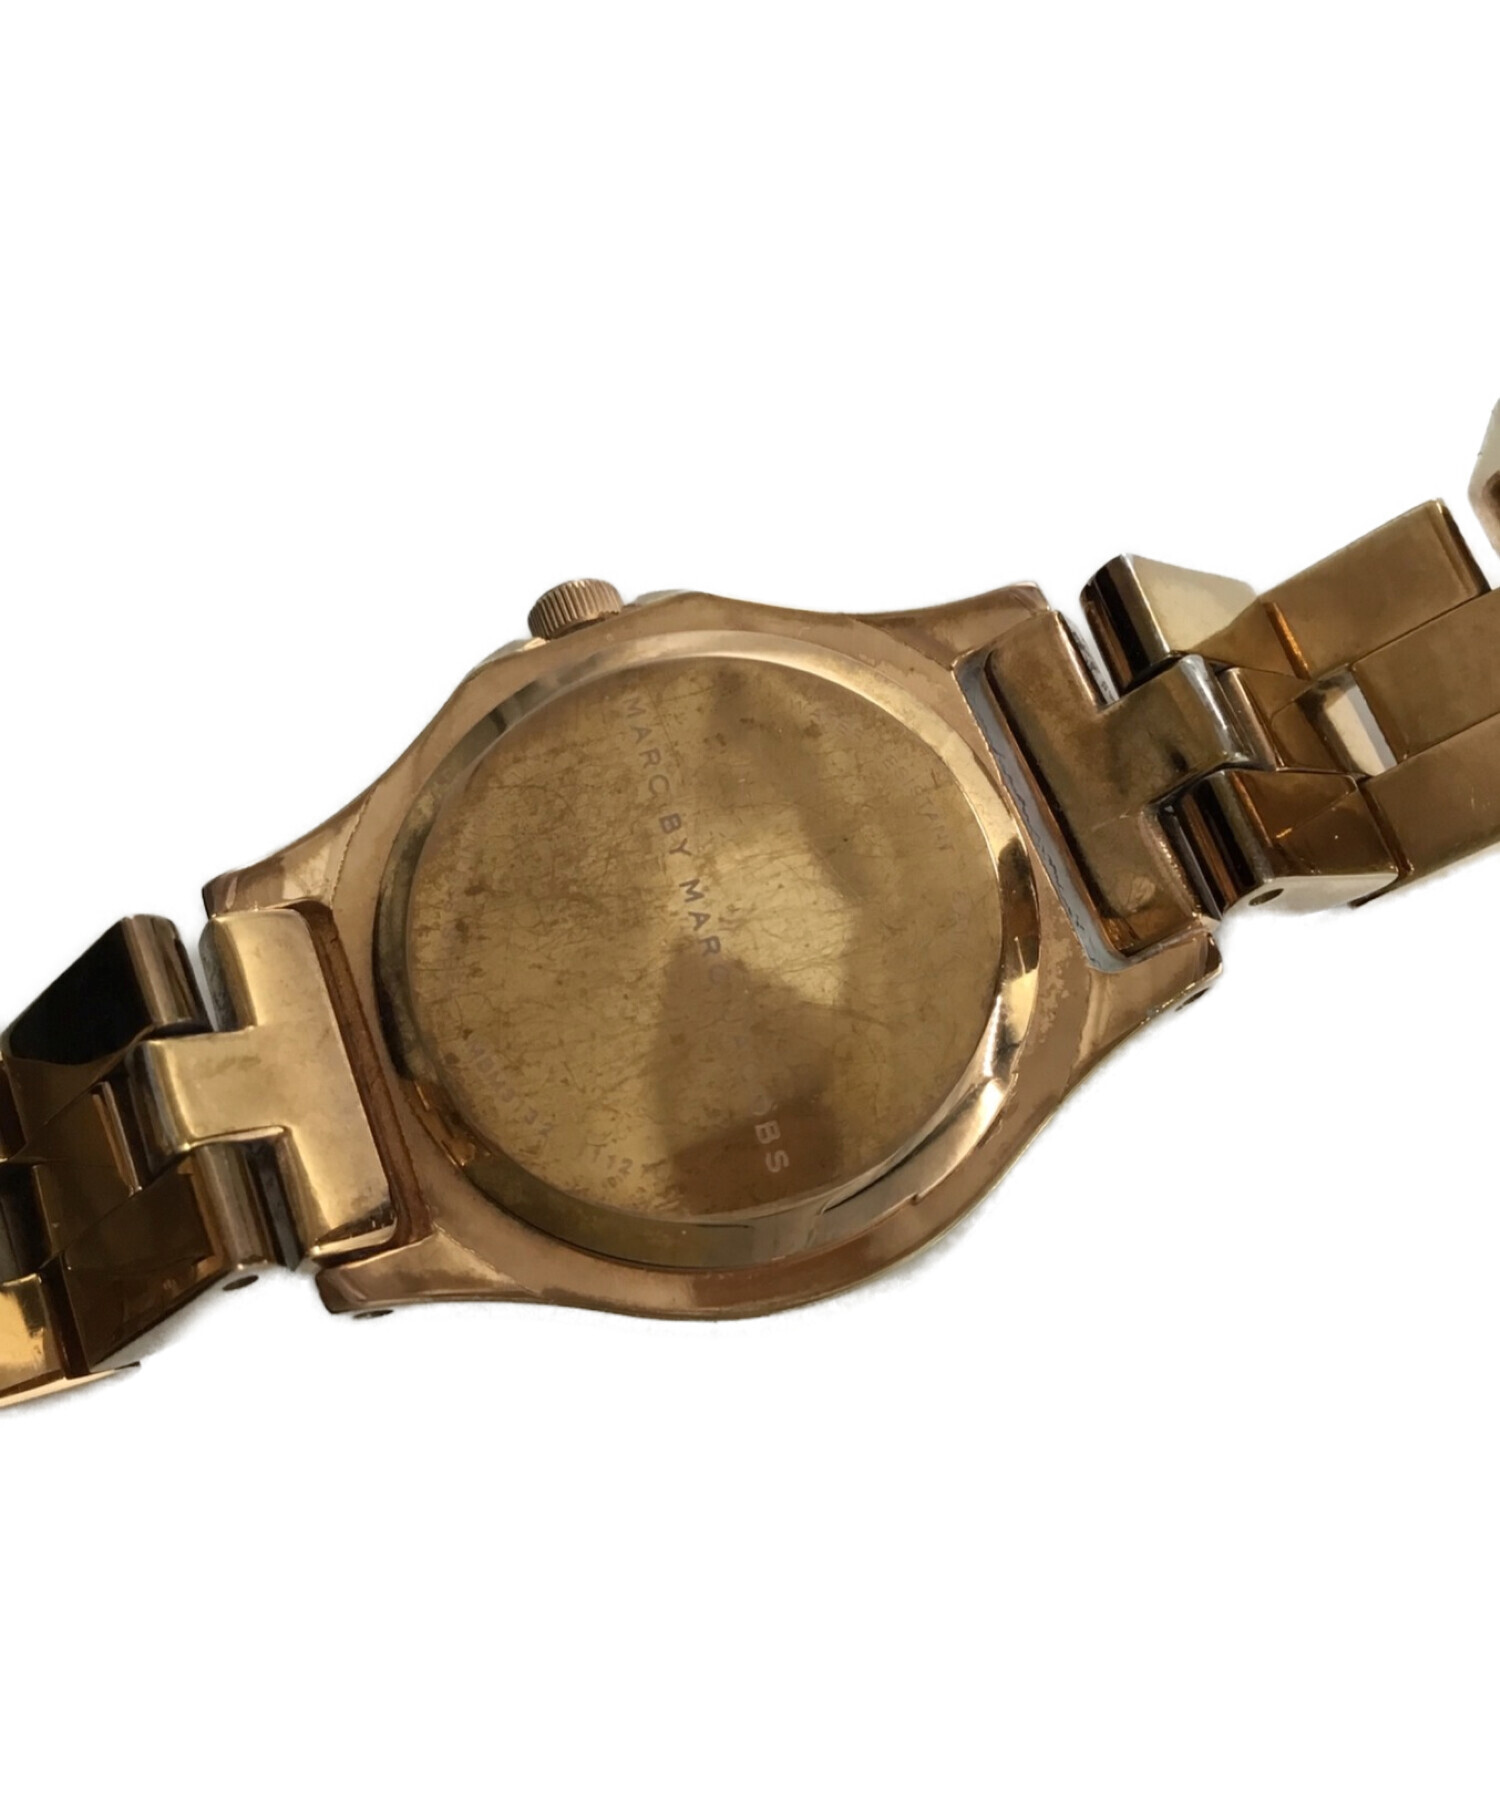 Marc by Marc Jacobs (マークバイマークジェイコブス) 腕時計 サイズ:-